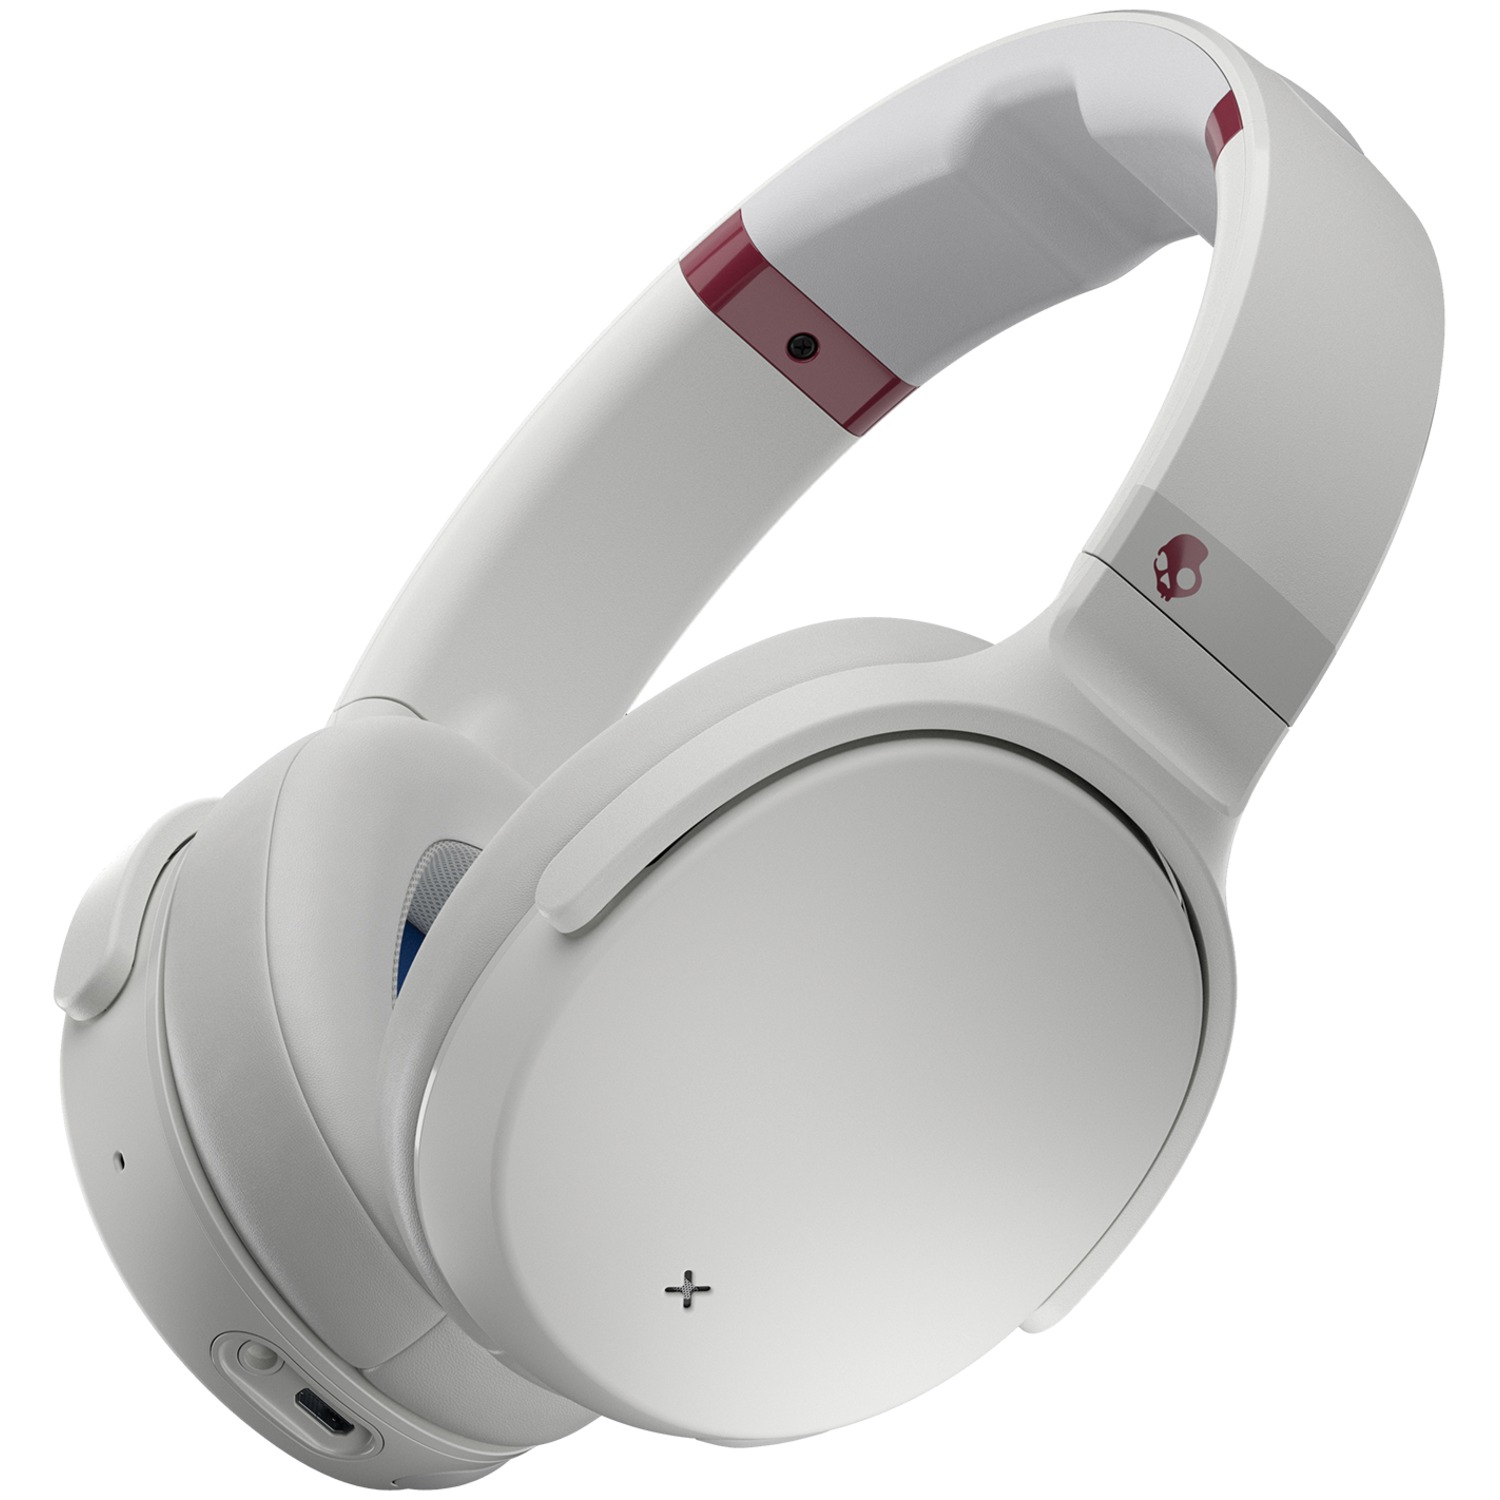 Skullcandy Venue on-ear Active Noise Canceling Bluetooth Wireless Headphones in Gray & Crimson - image 1 of 8